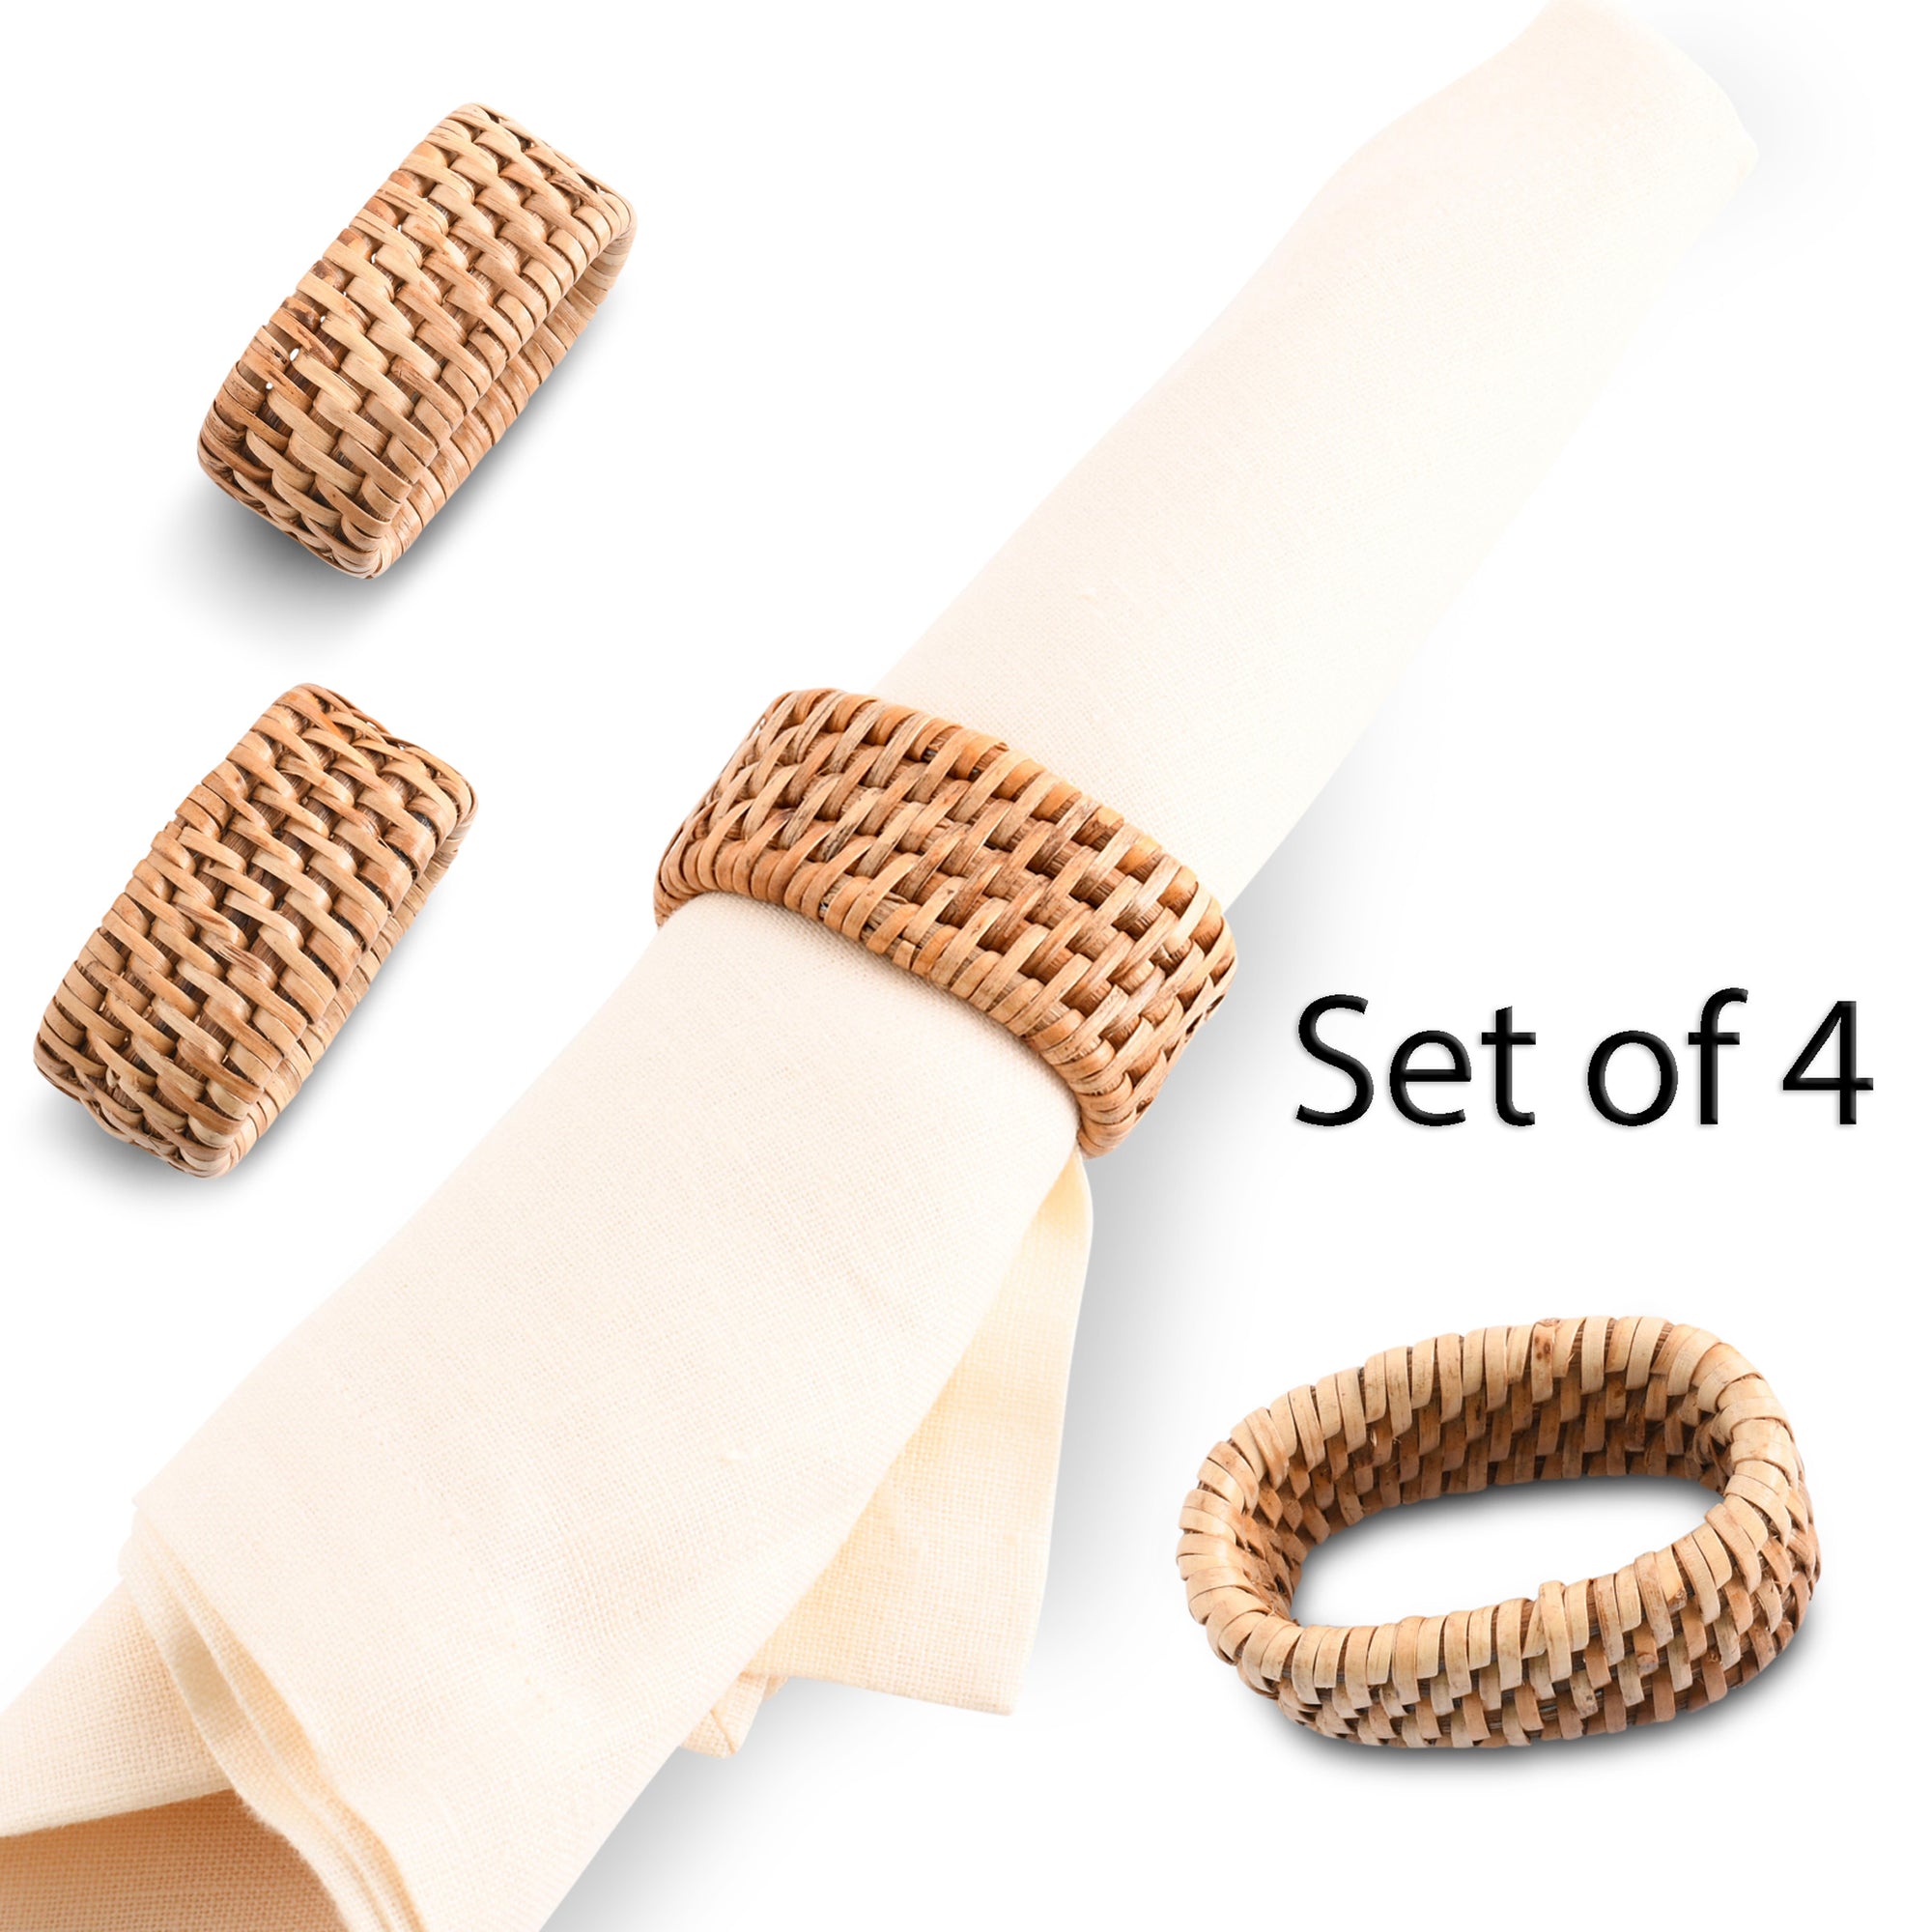 Vagabond House Hand Woven Rattan Napkin Ring - Set of 4 Product Image